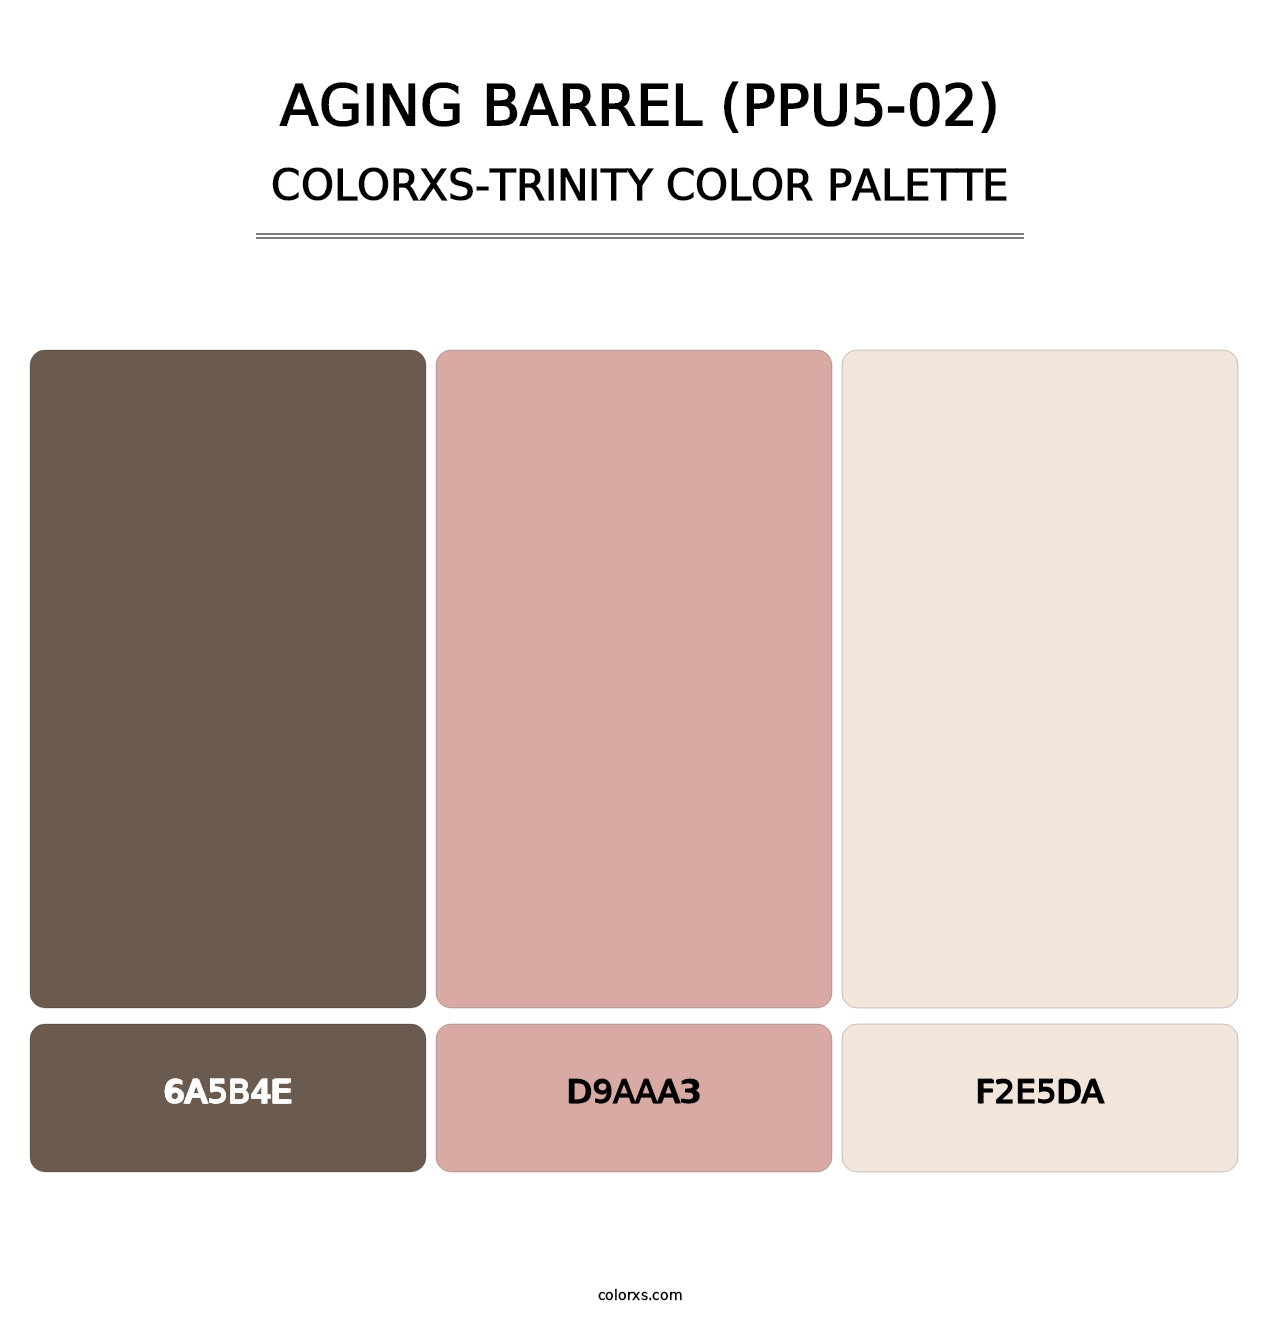 Aging Barrel (PPU5-02) - Colorxs Trinity Palette